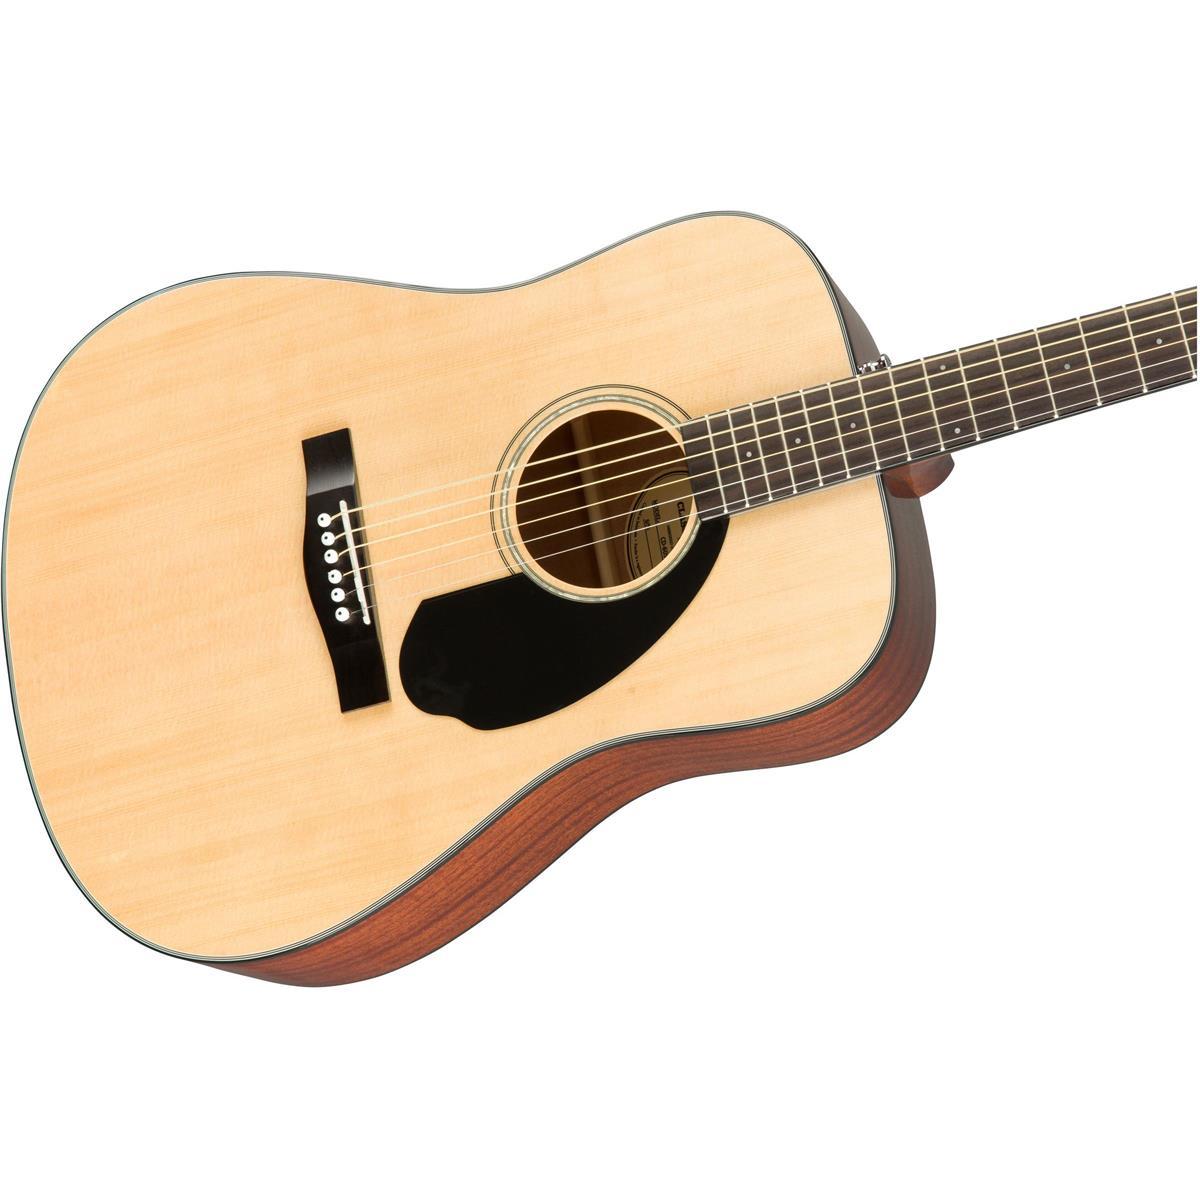 Fender FSR CC-60S Concert Acoustic Guitar for $99 Shipped